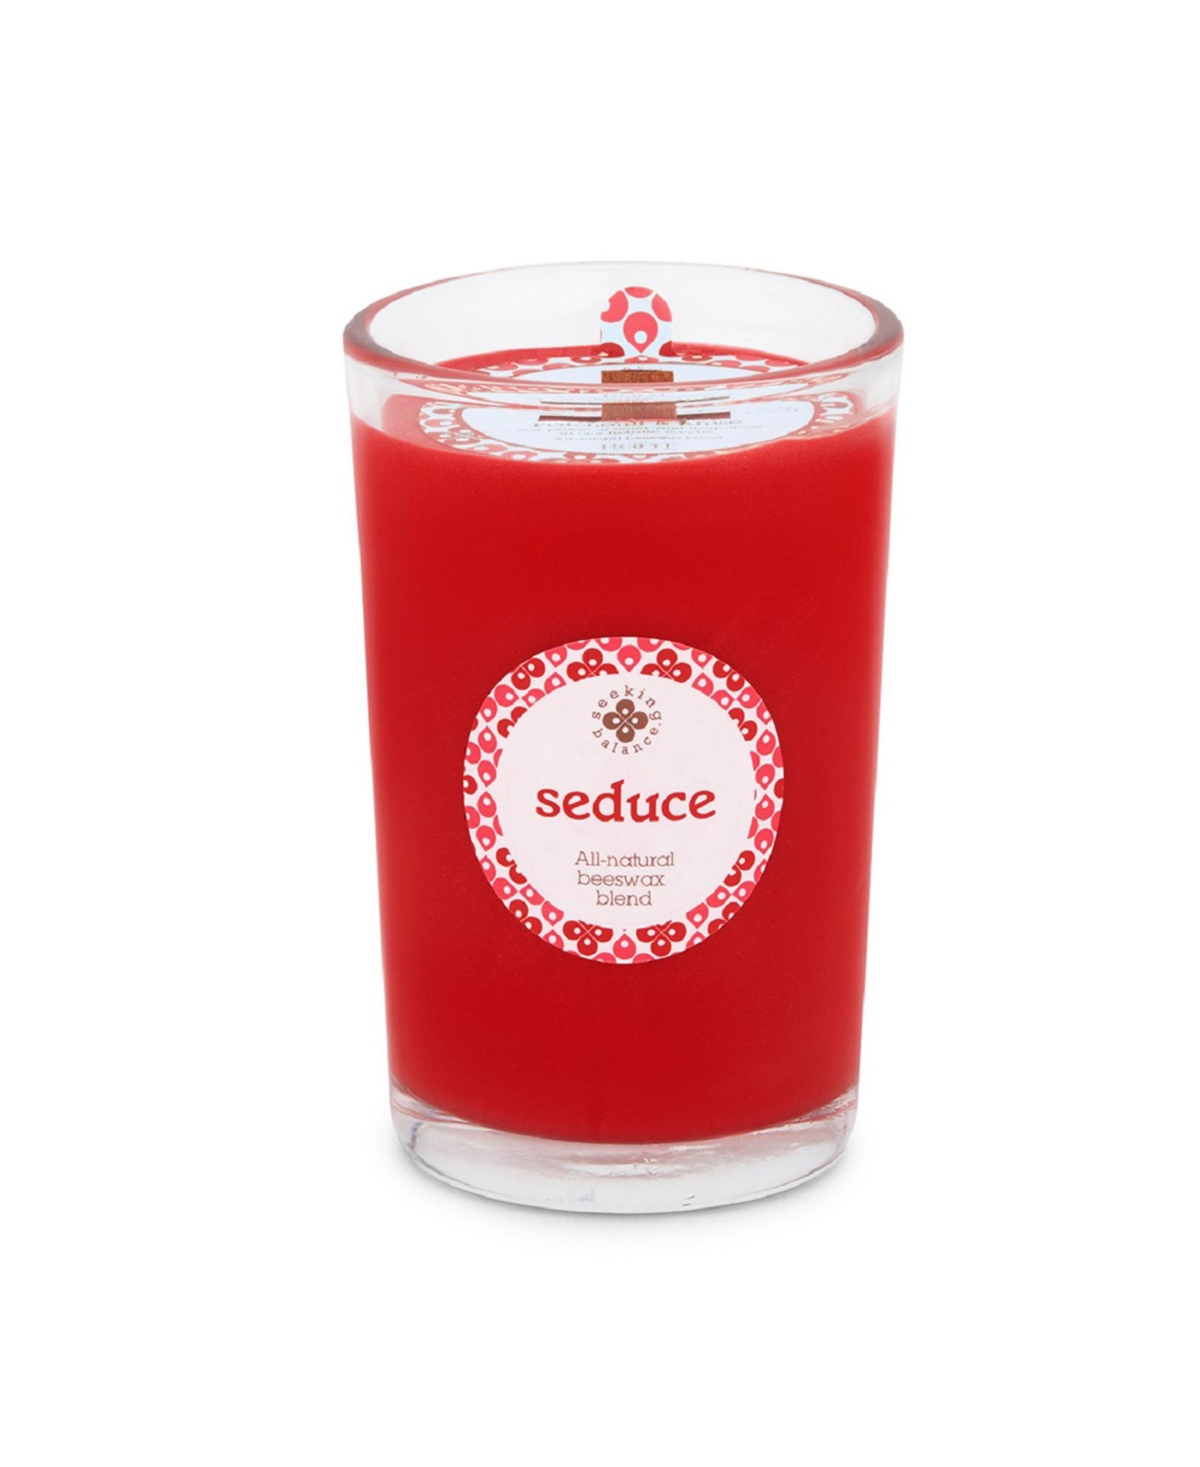 Seeking Balance Seduce Patchouli Anise Spa Jar Candle, 8 oz - Red